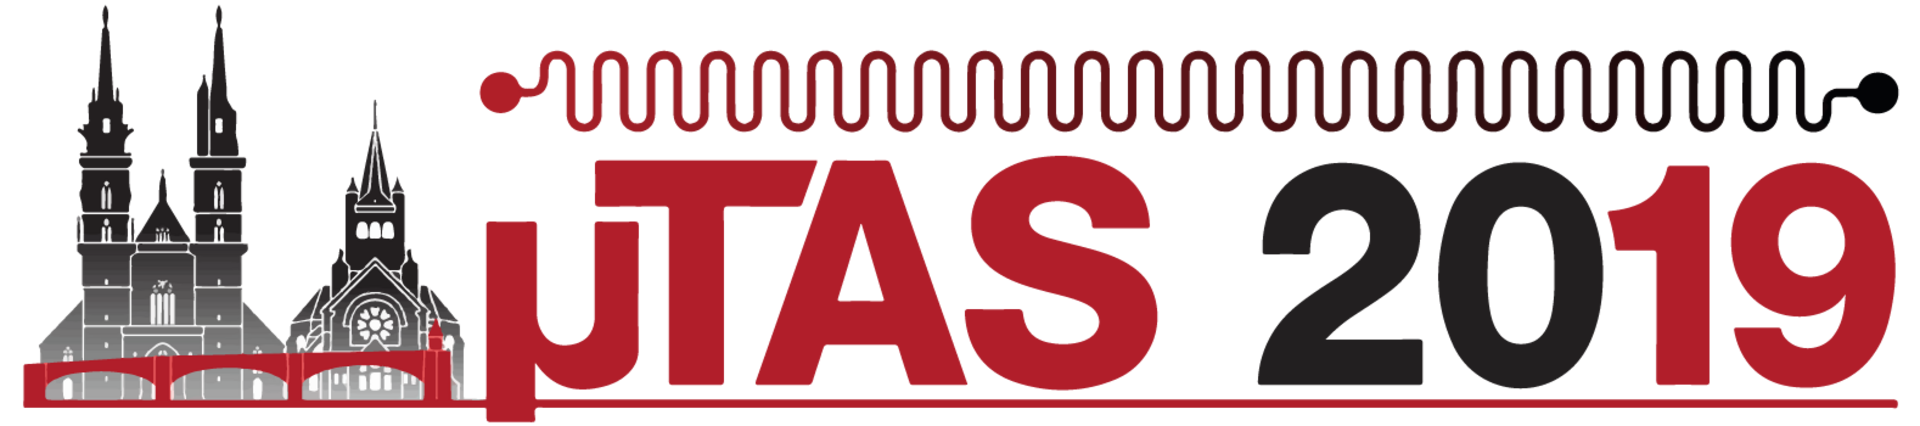 microTAS 2019 logo